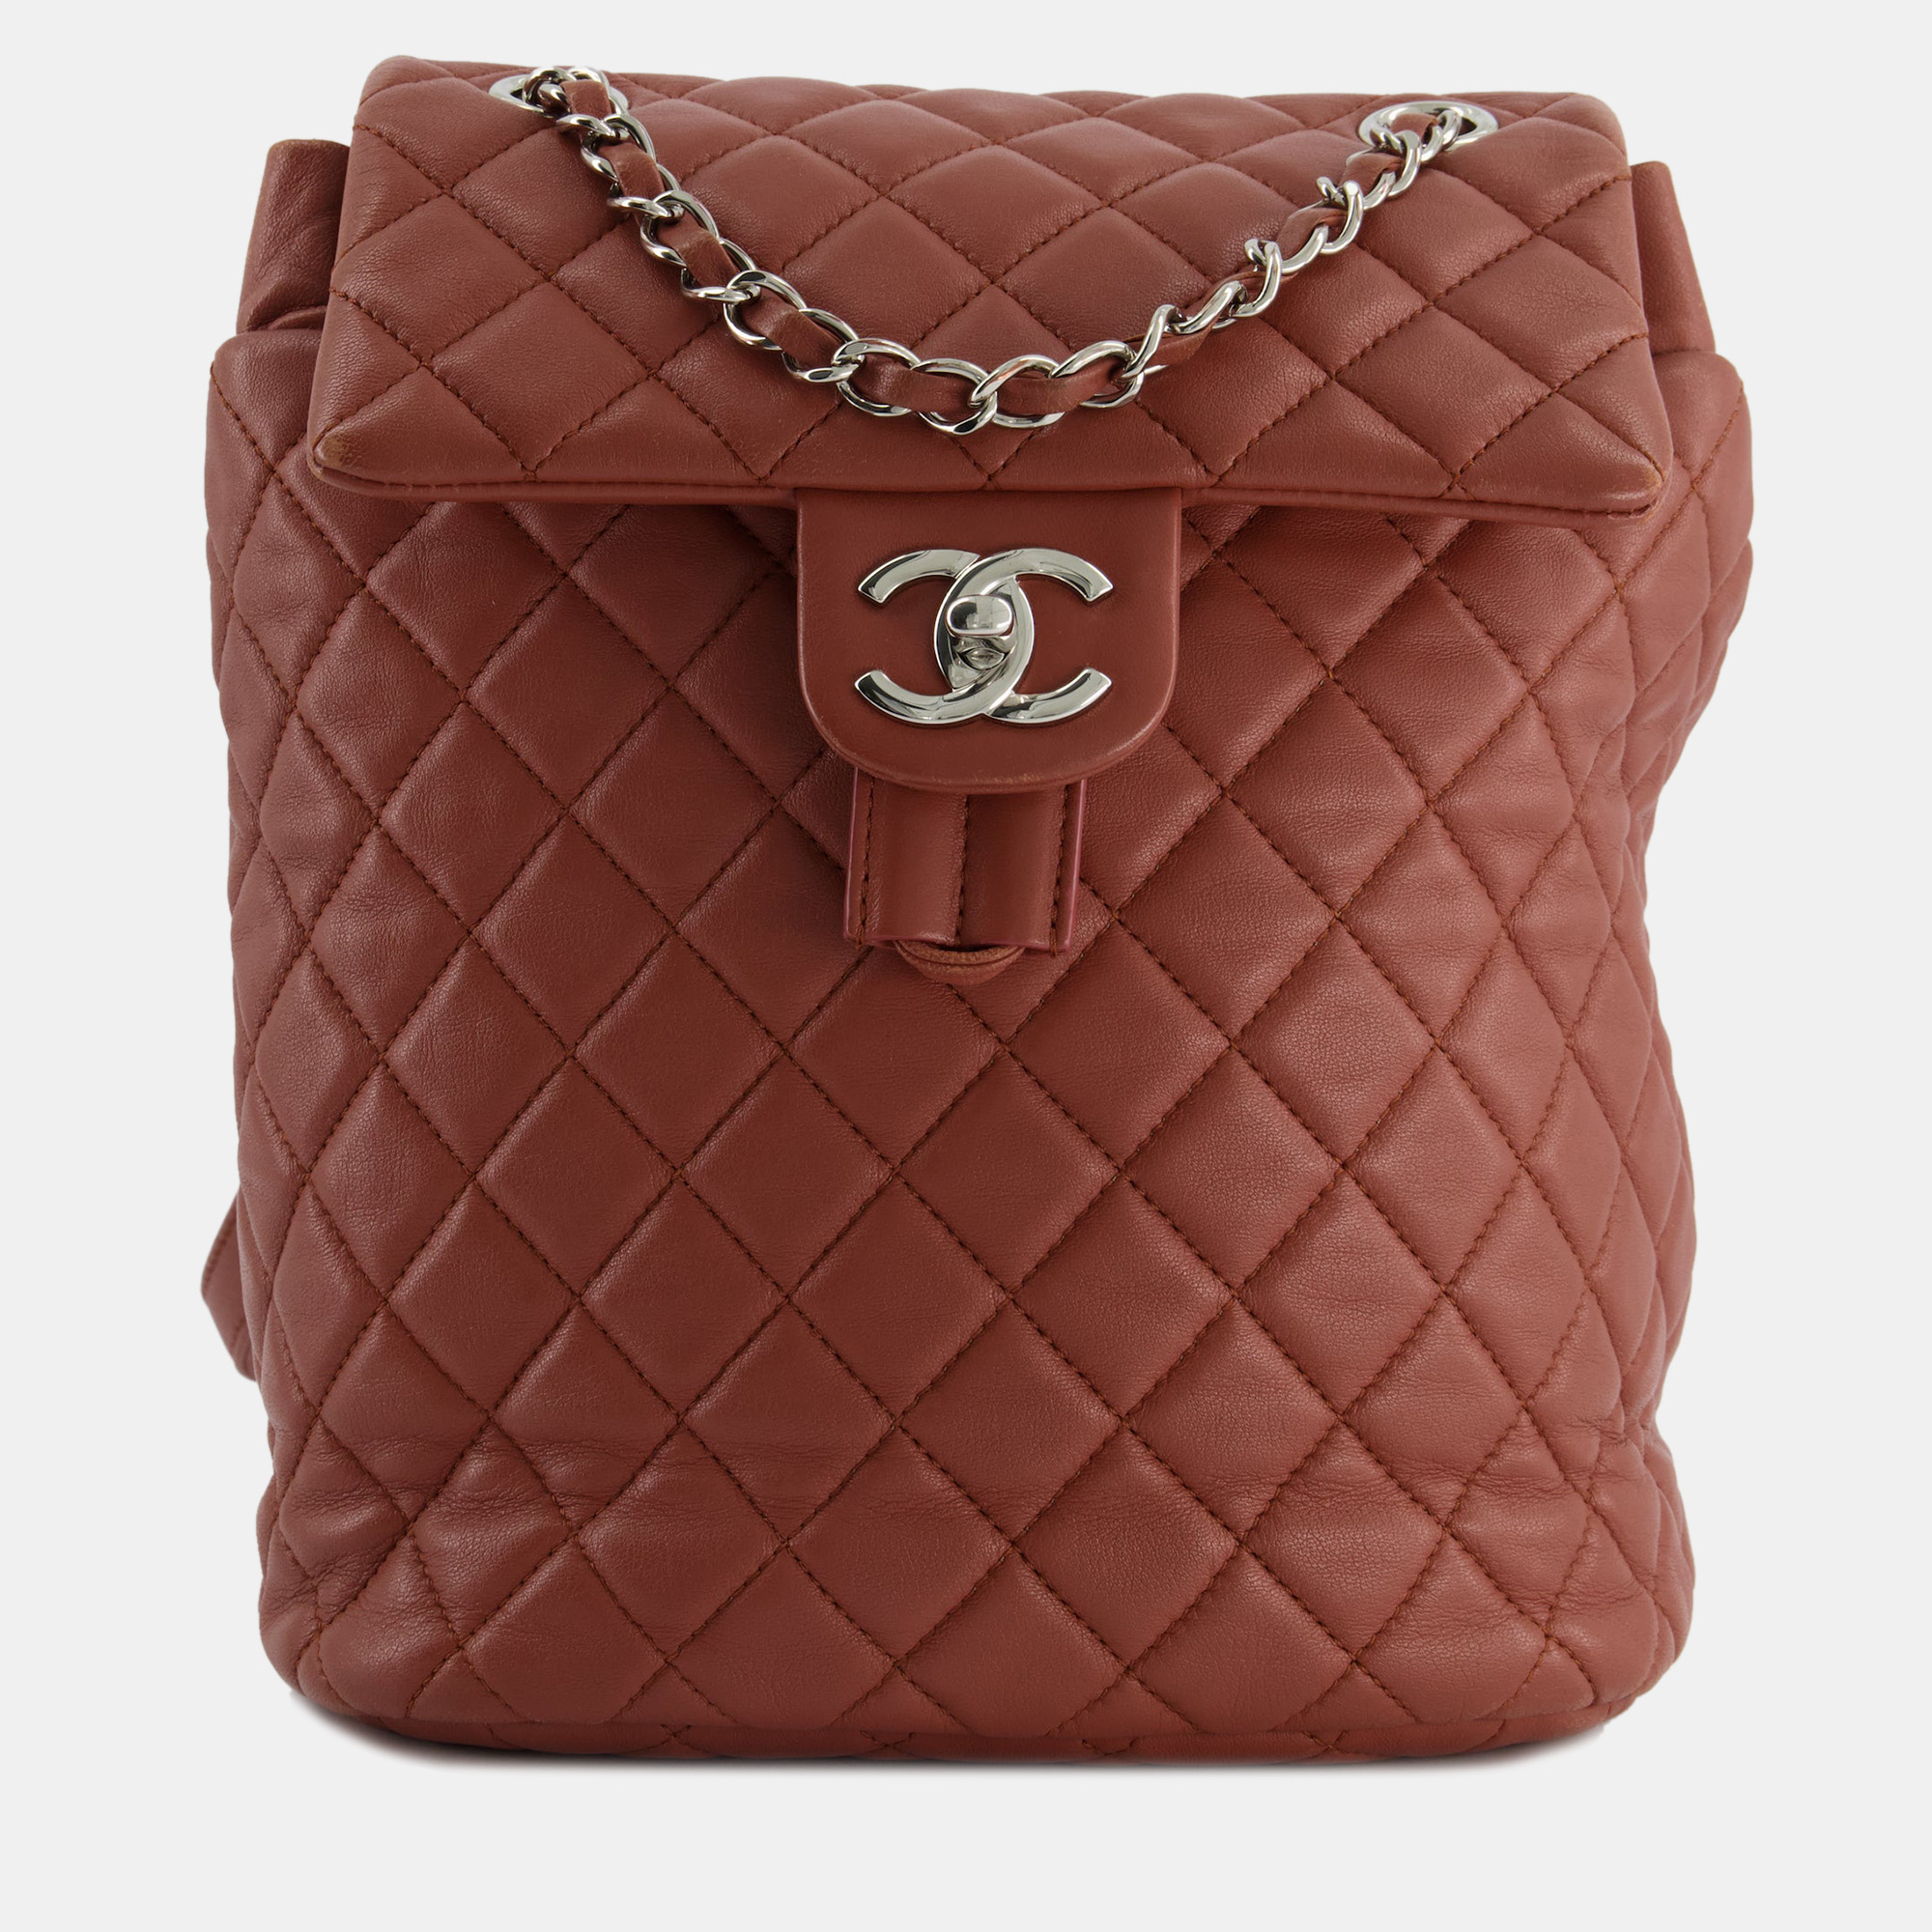 Chanel backpack in caramel brown lambskin